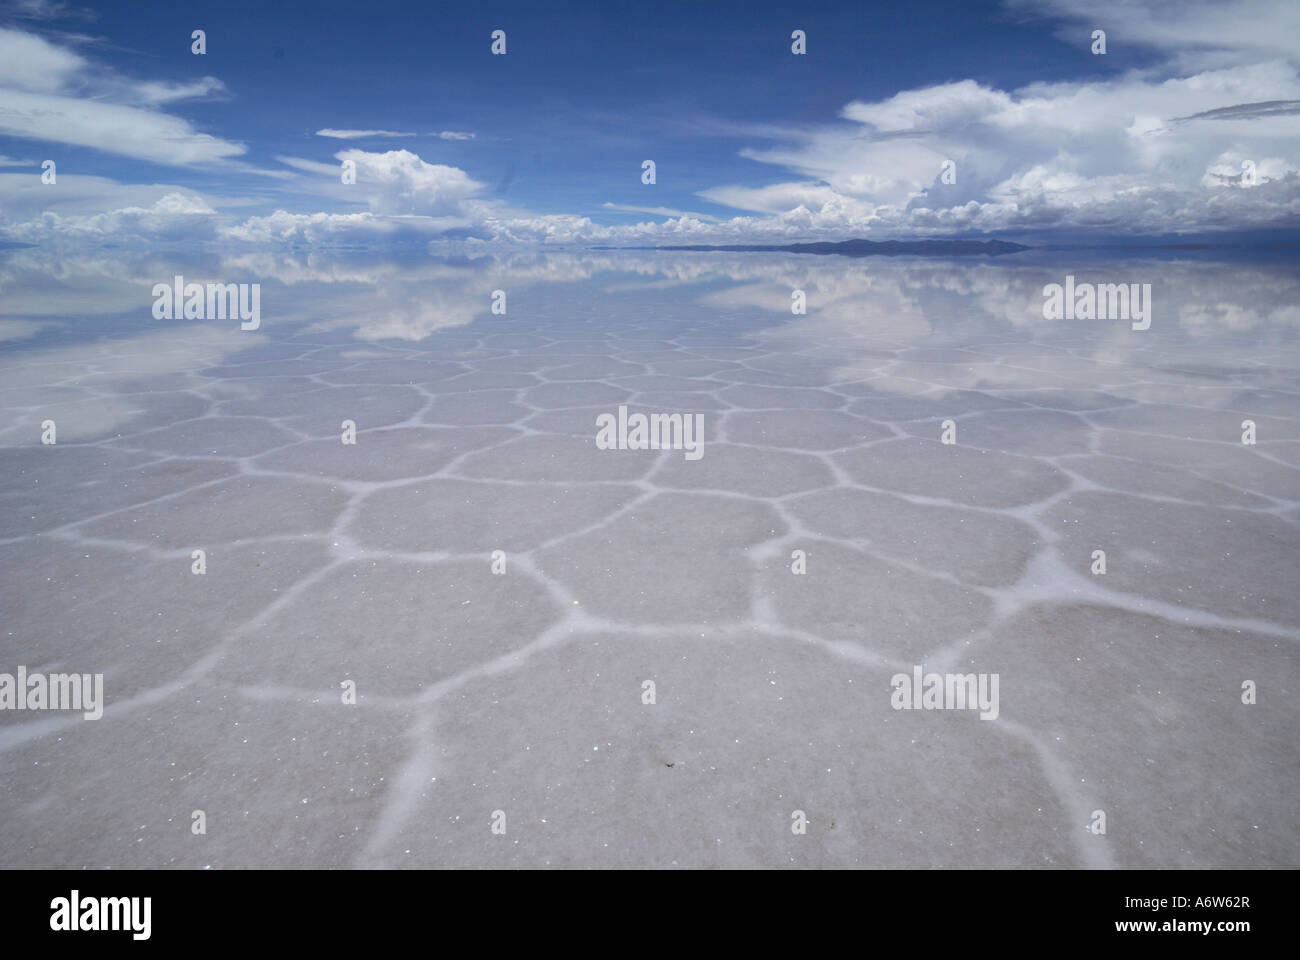 Pentagones on the surface of the salt lake, Salar de Uyuni, Bolivia Stock Photo